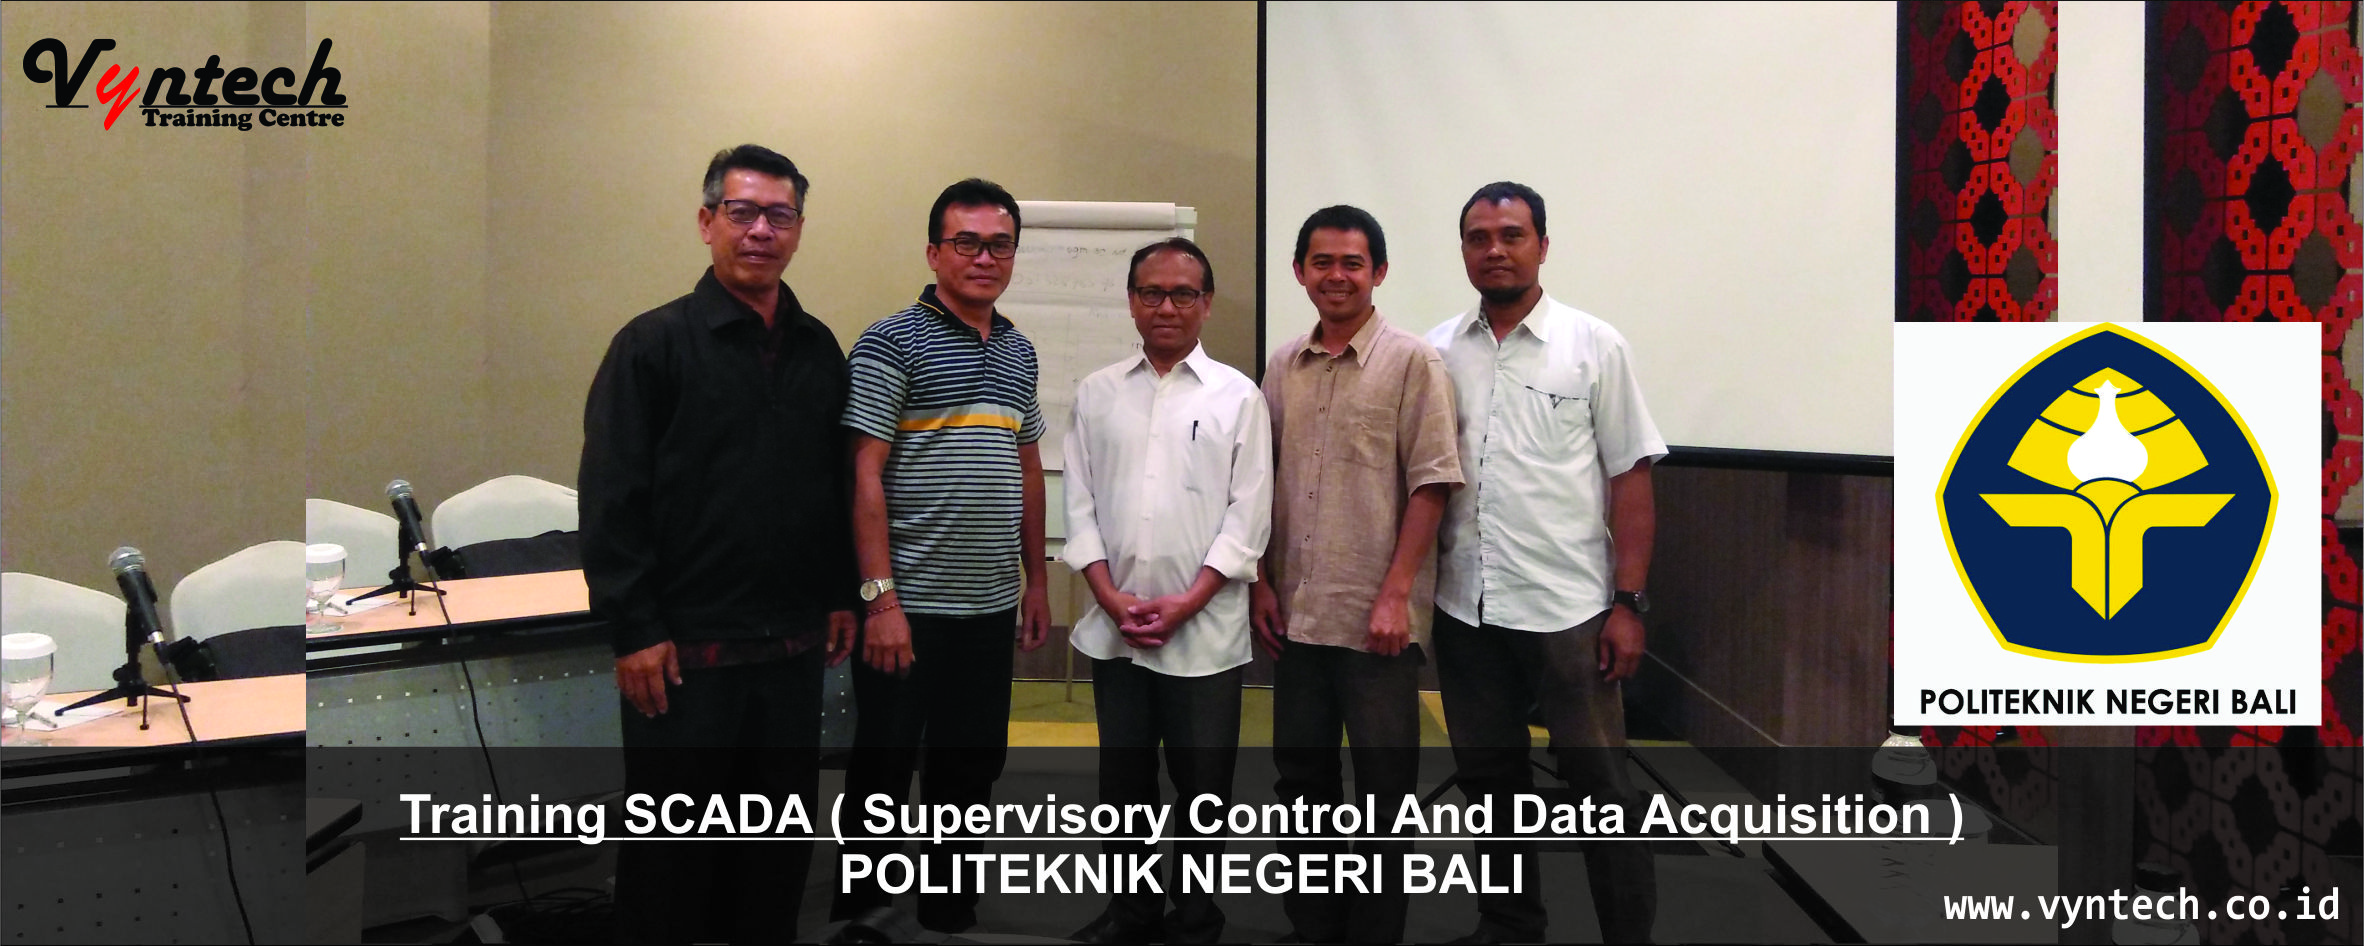 20170814 Training SCADA ( Supervisory Control And Data Acquisition ) - Politeknik Negeri Bali, di Yogya